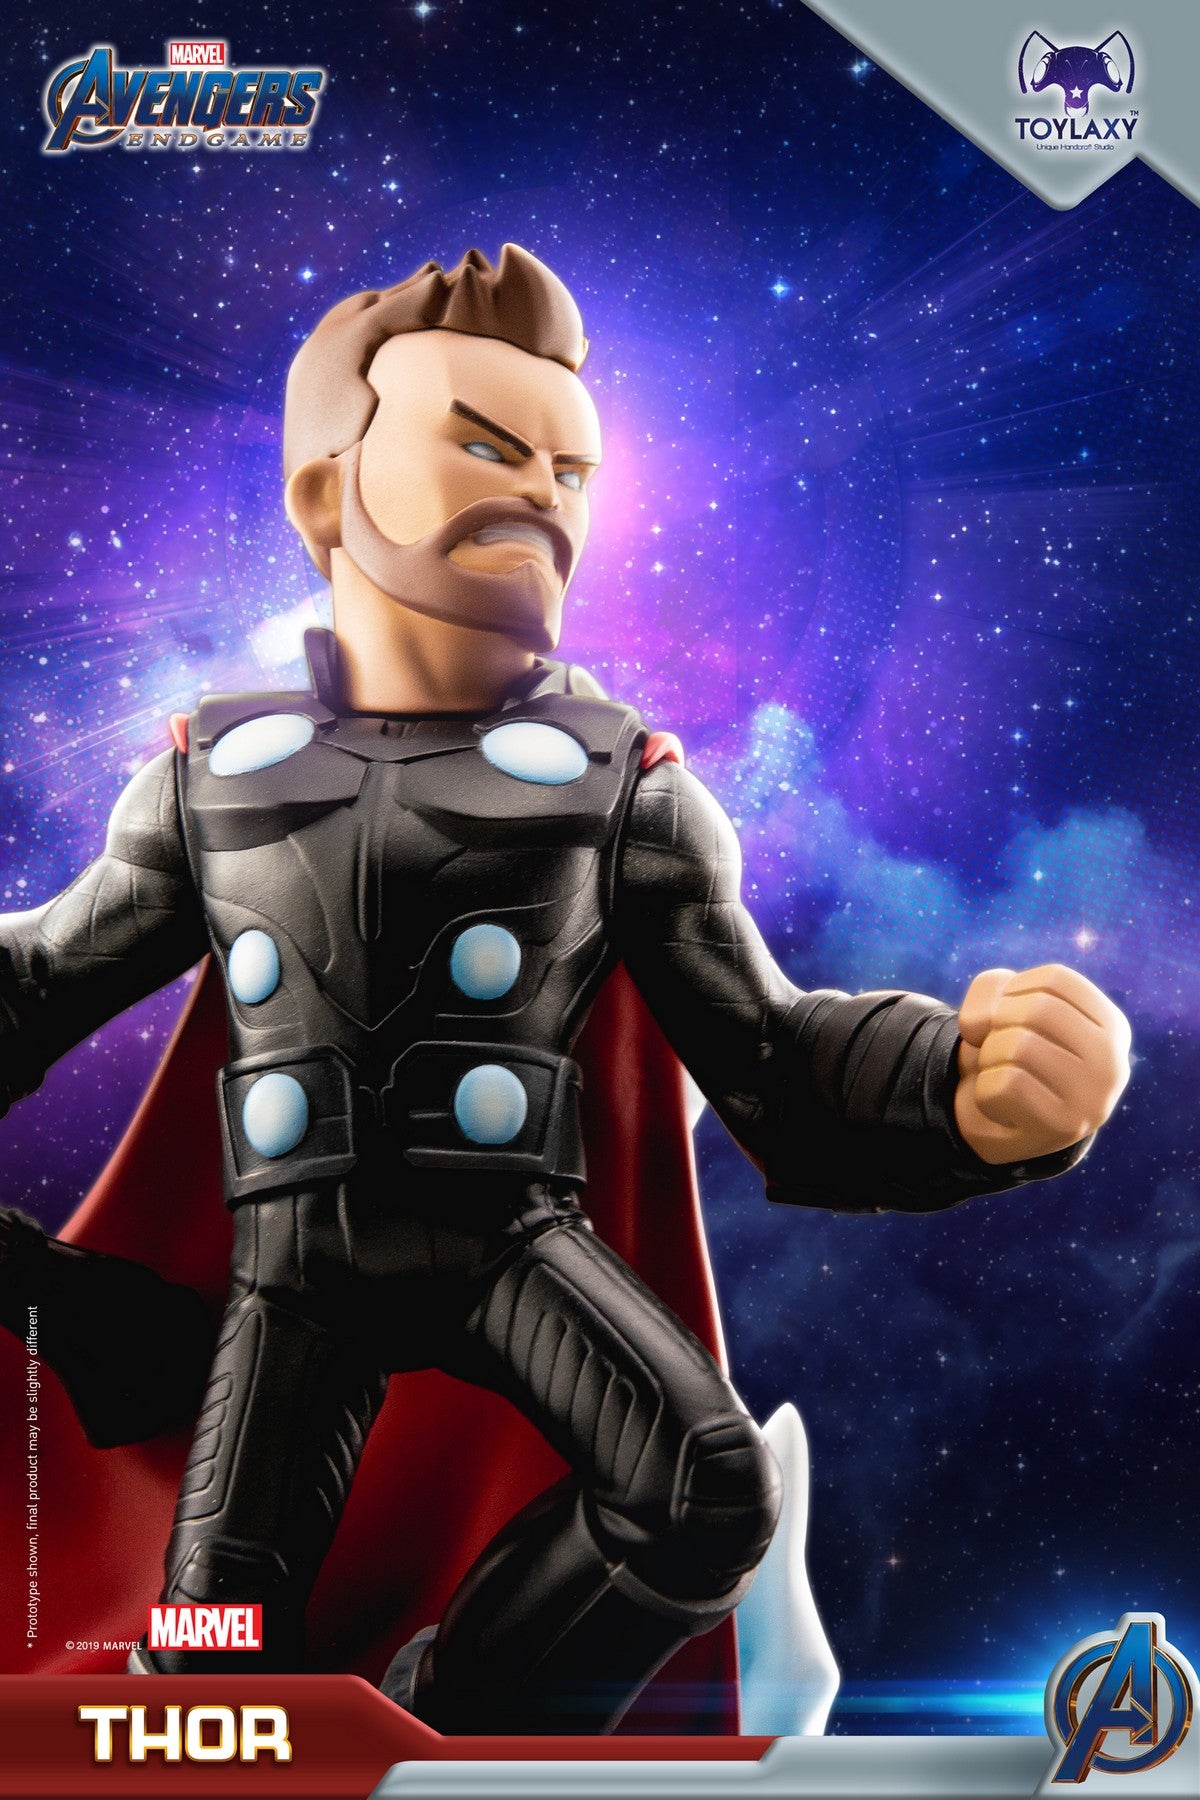 漫威復仇者聯盟：雷神索爾正版模型手辦人偶玩具 Marvel's Avengers: Endgame Premium PVC Thor official figure toy 1 thor doll powerful